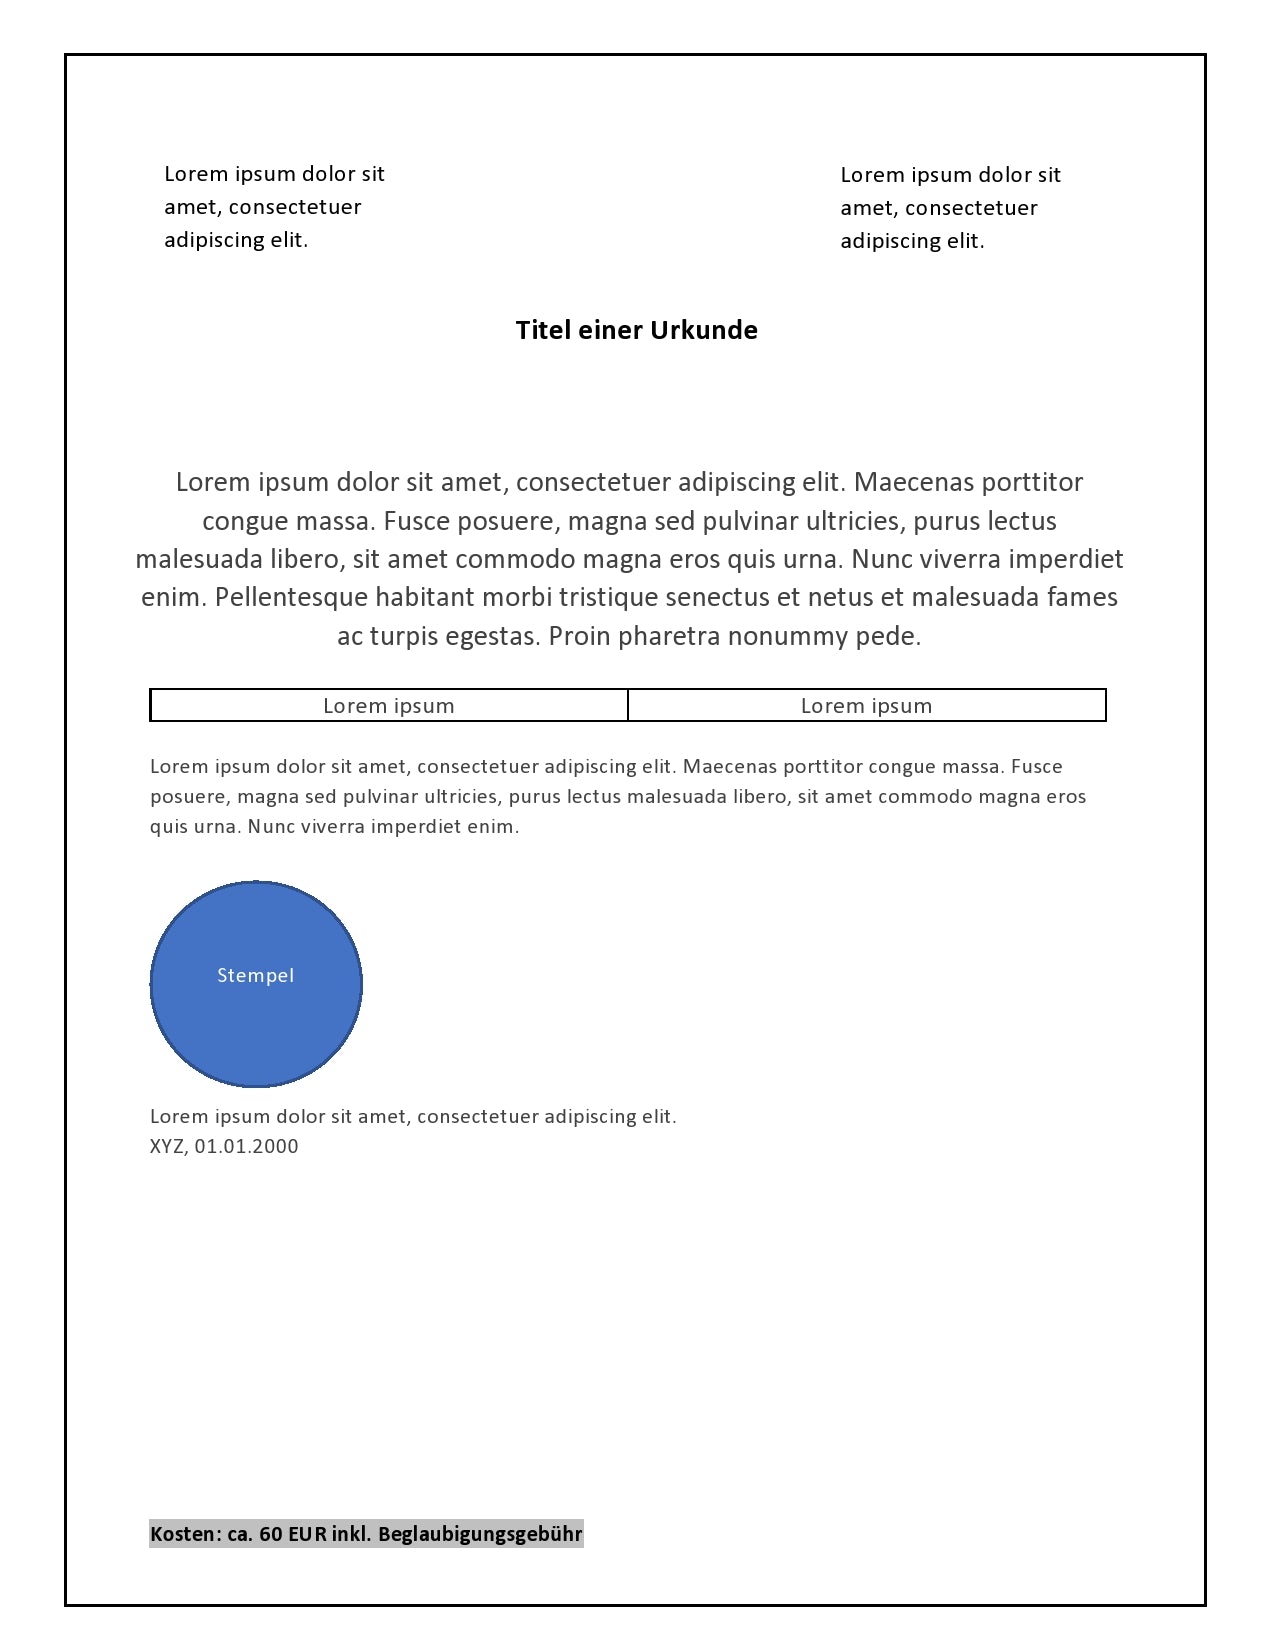 Abschlussurkunde (GBR) Certificate of Higher Education - Shop-Translation.de - Übersetzungsbüro ReSartus 